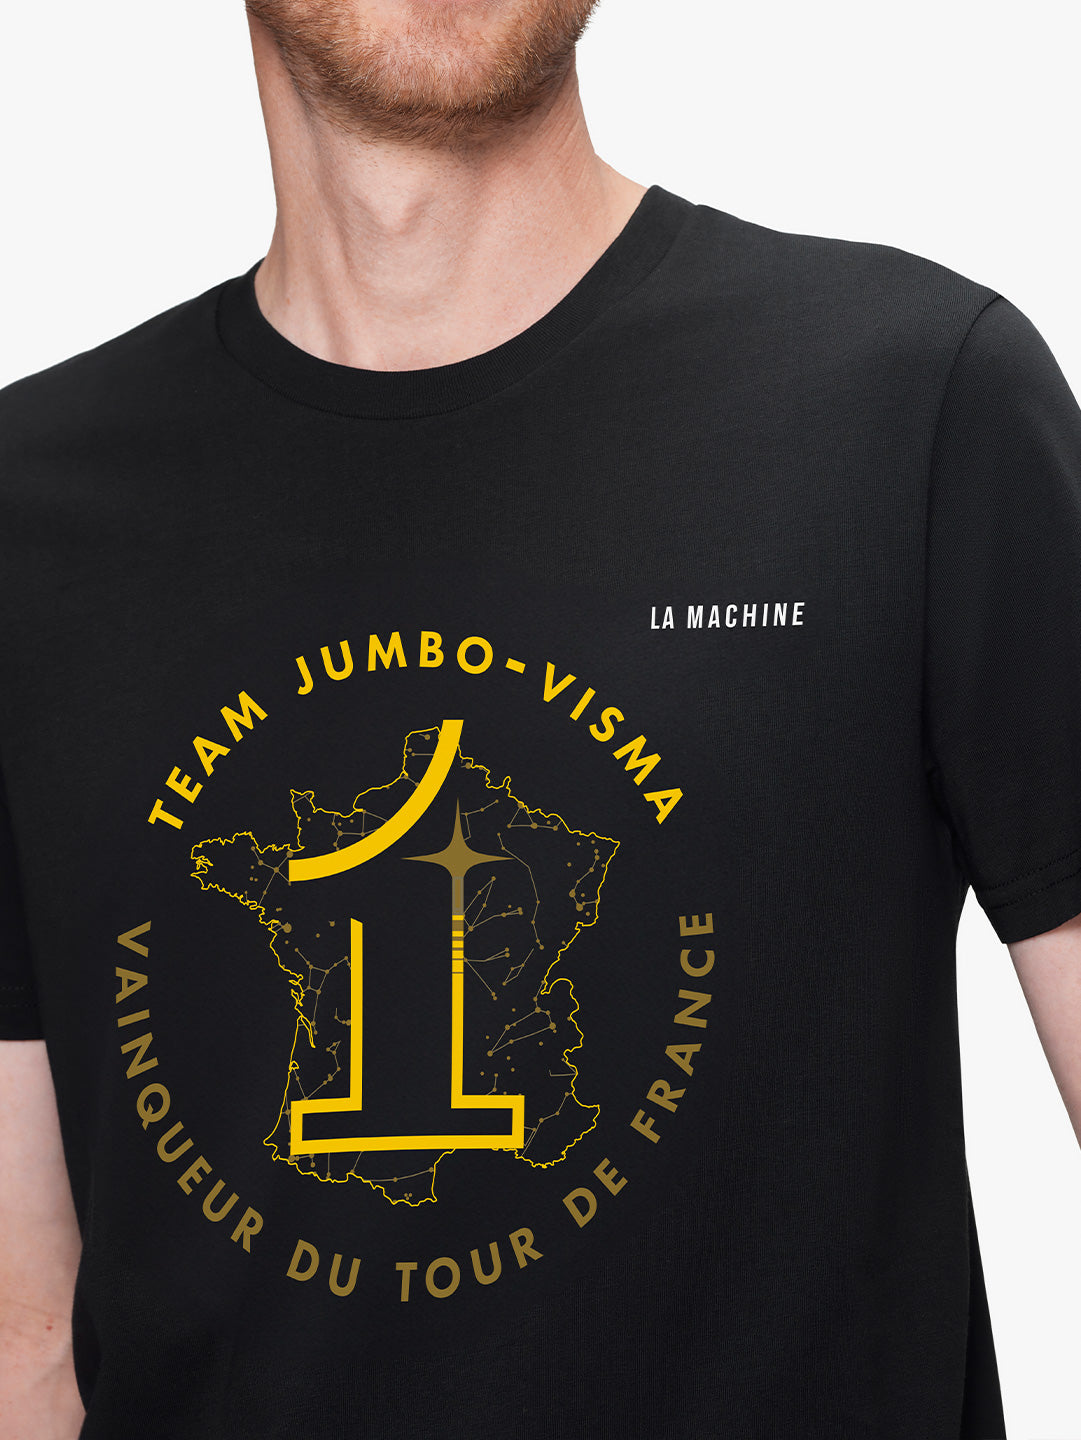 Team Jumbo-Visma - Tour de France - Victory T-shirt